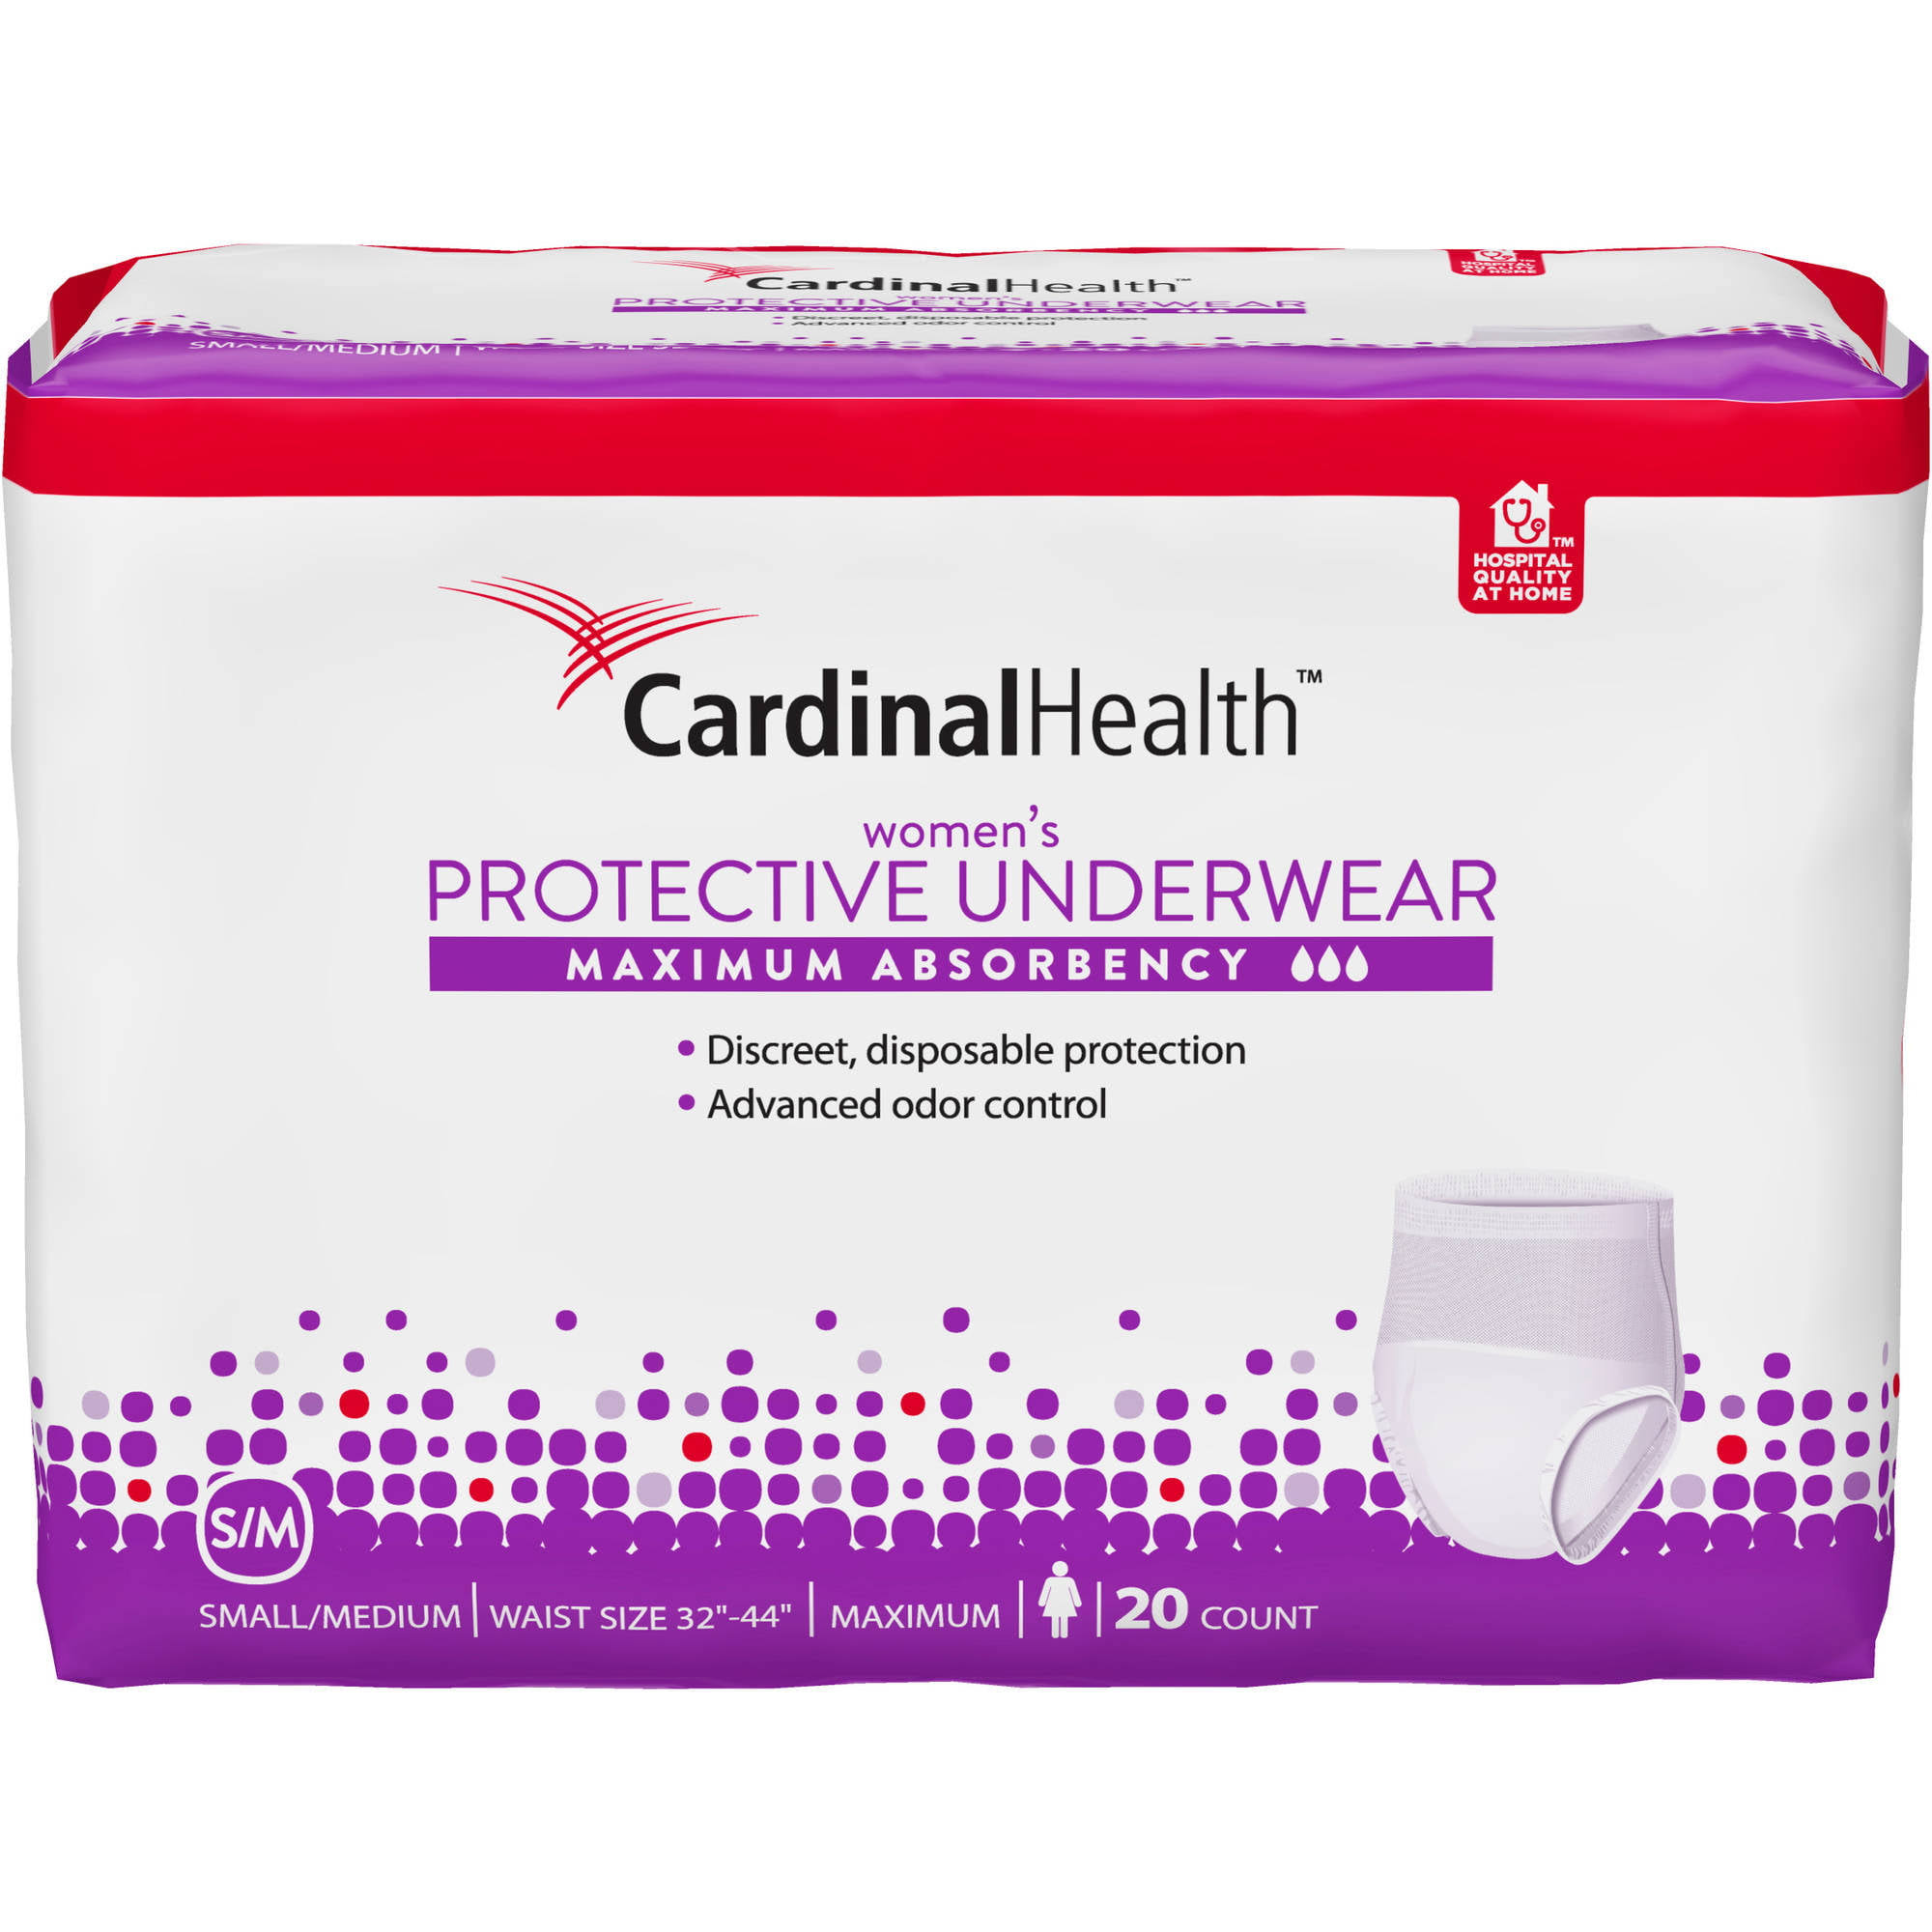 Cardinal Health Maximum Absorbency Women's Protective Underwear - Small/Medium, x20